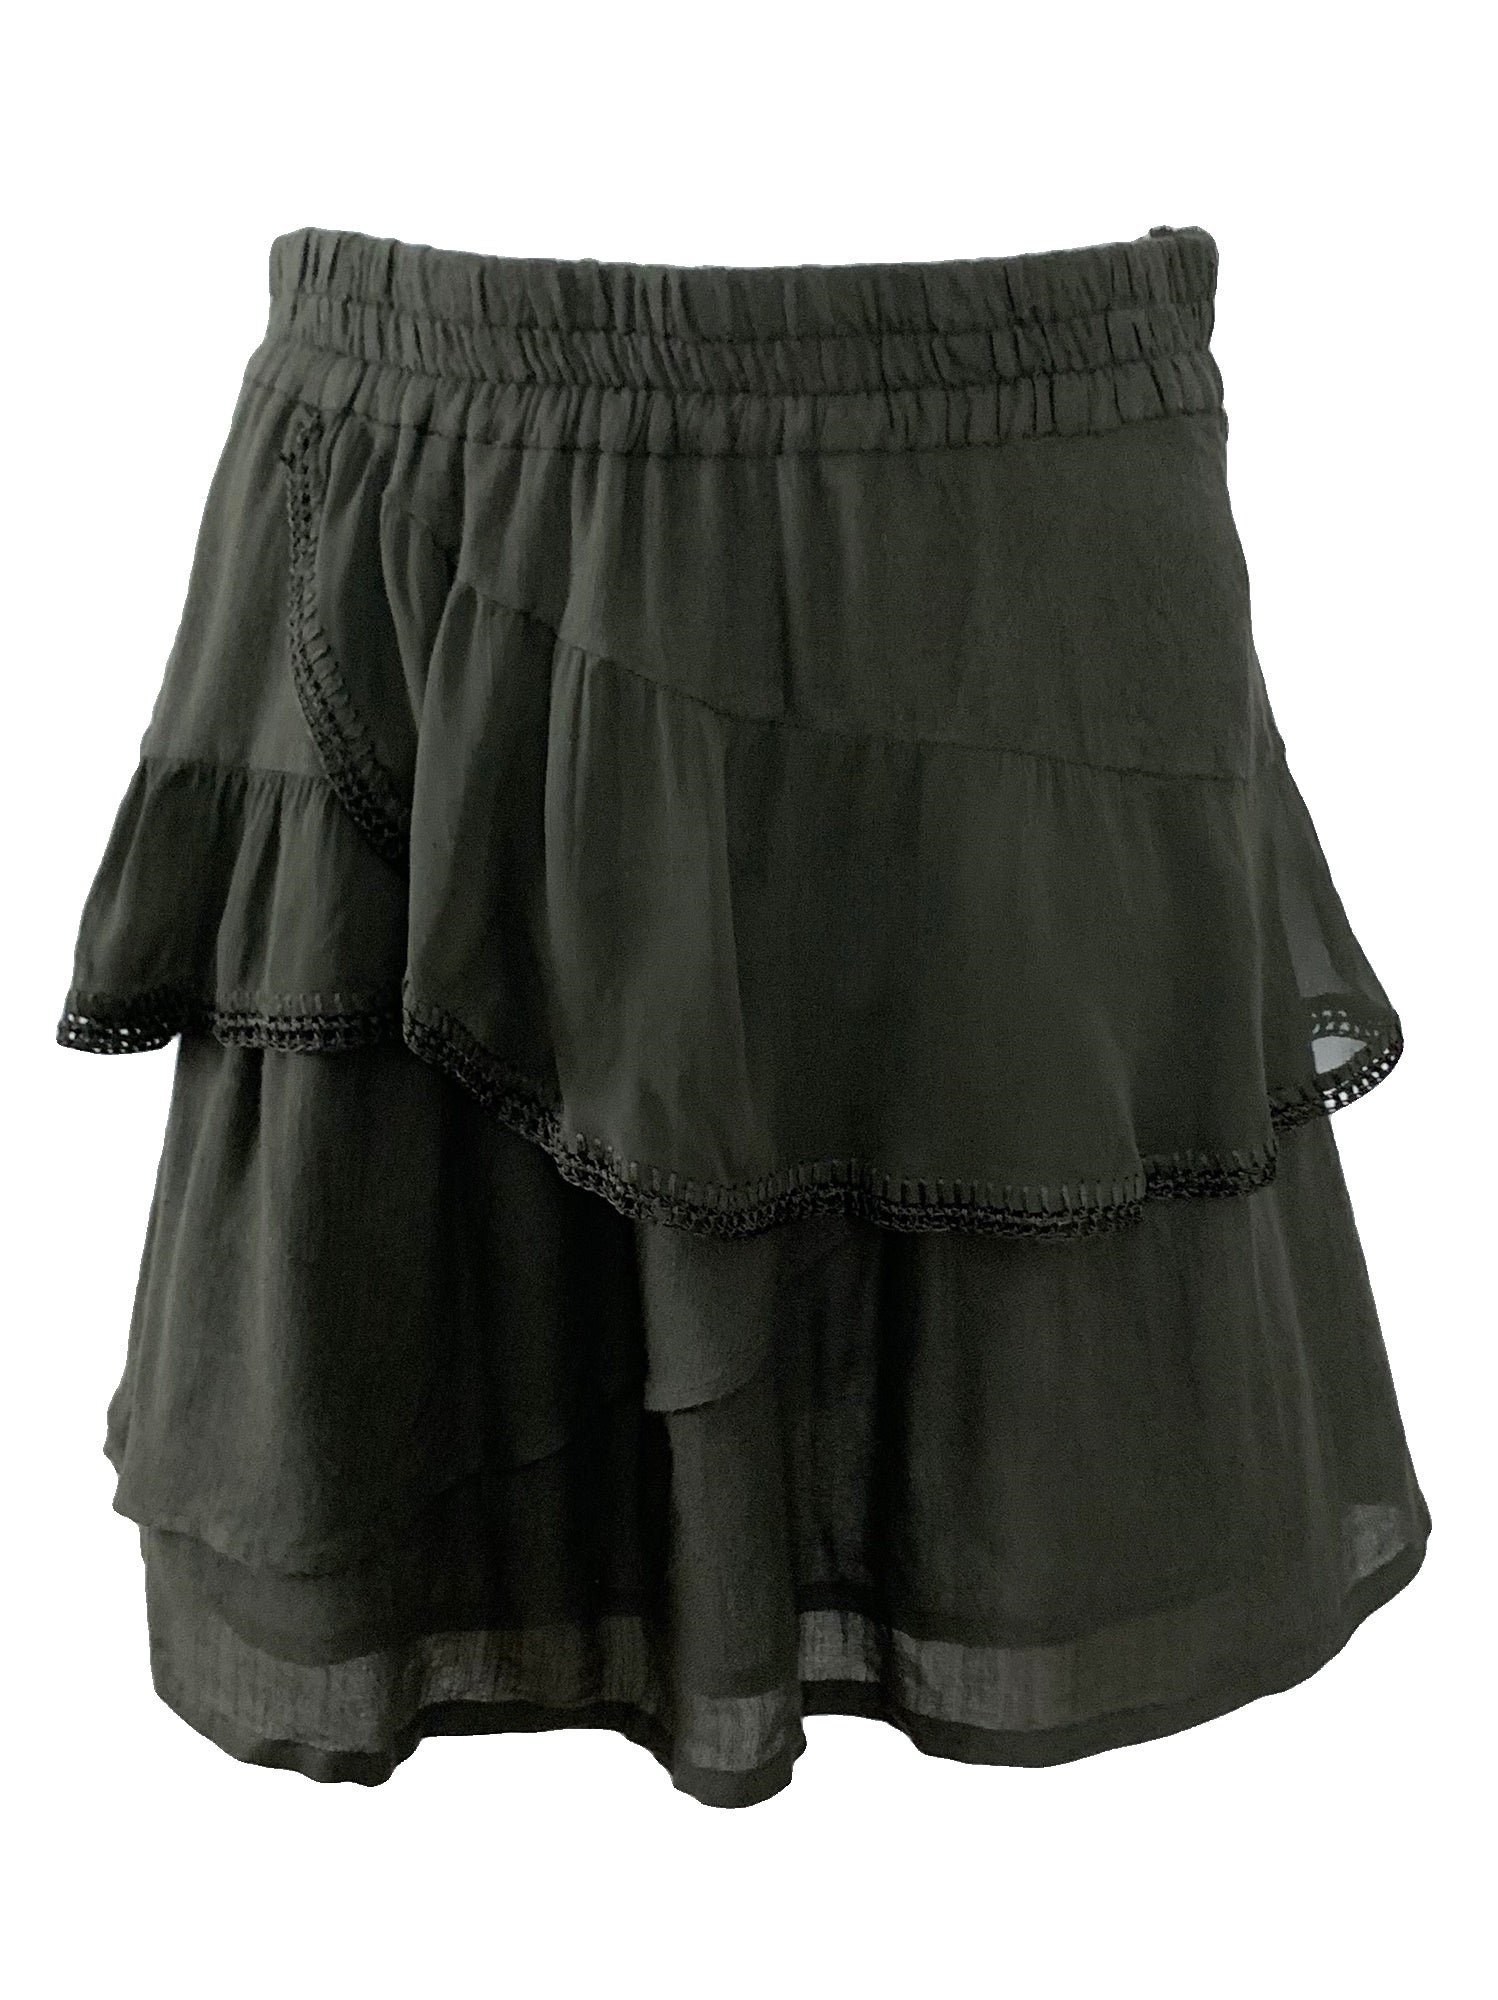 Carmela Ruffle Mini Skirt Size 2